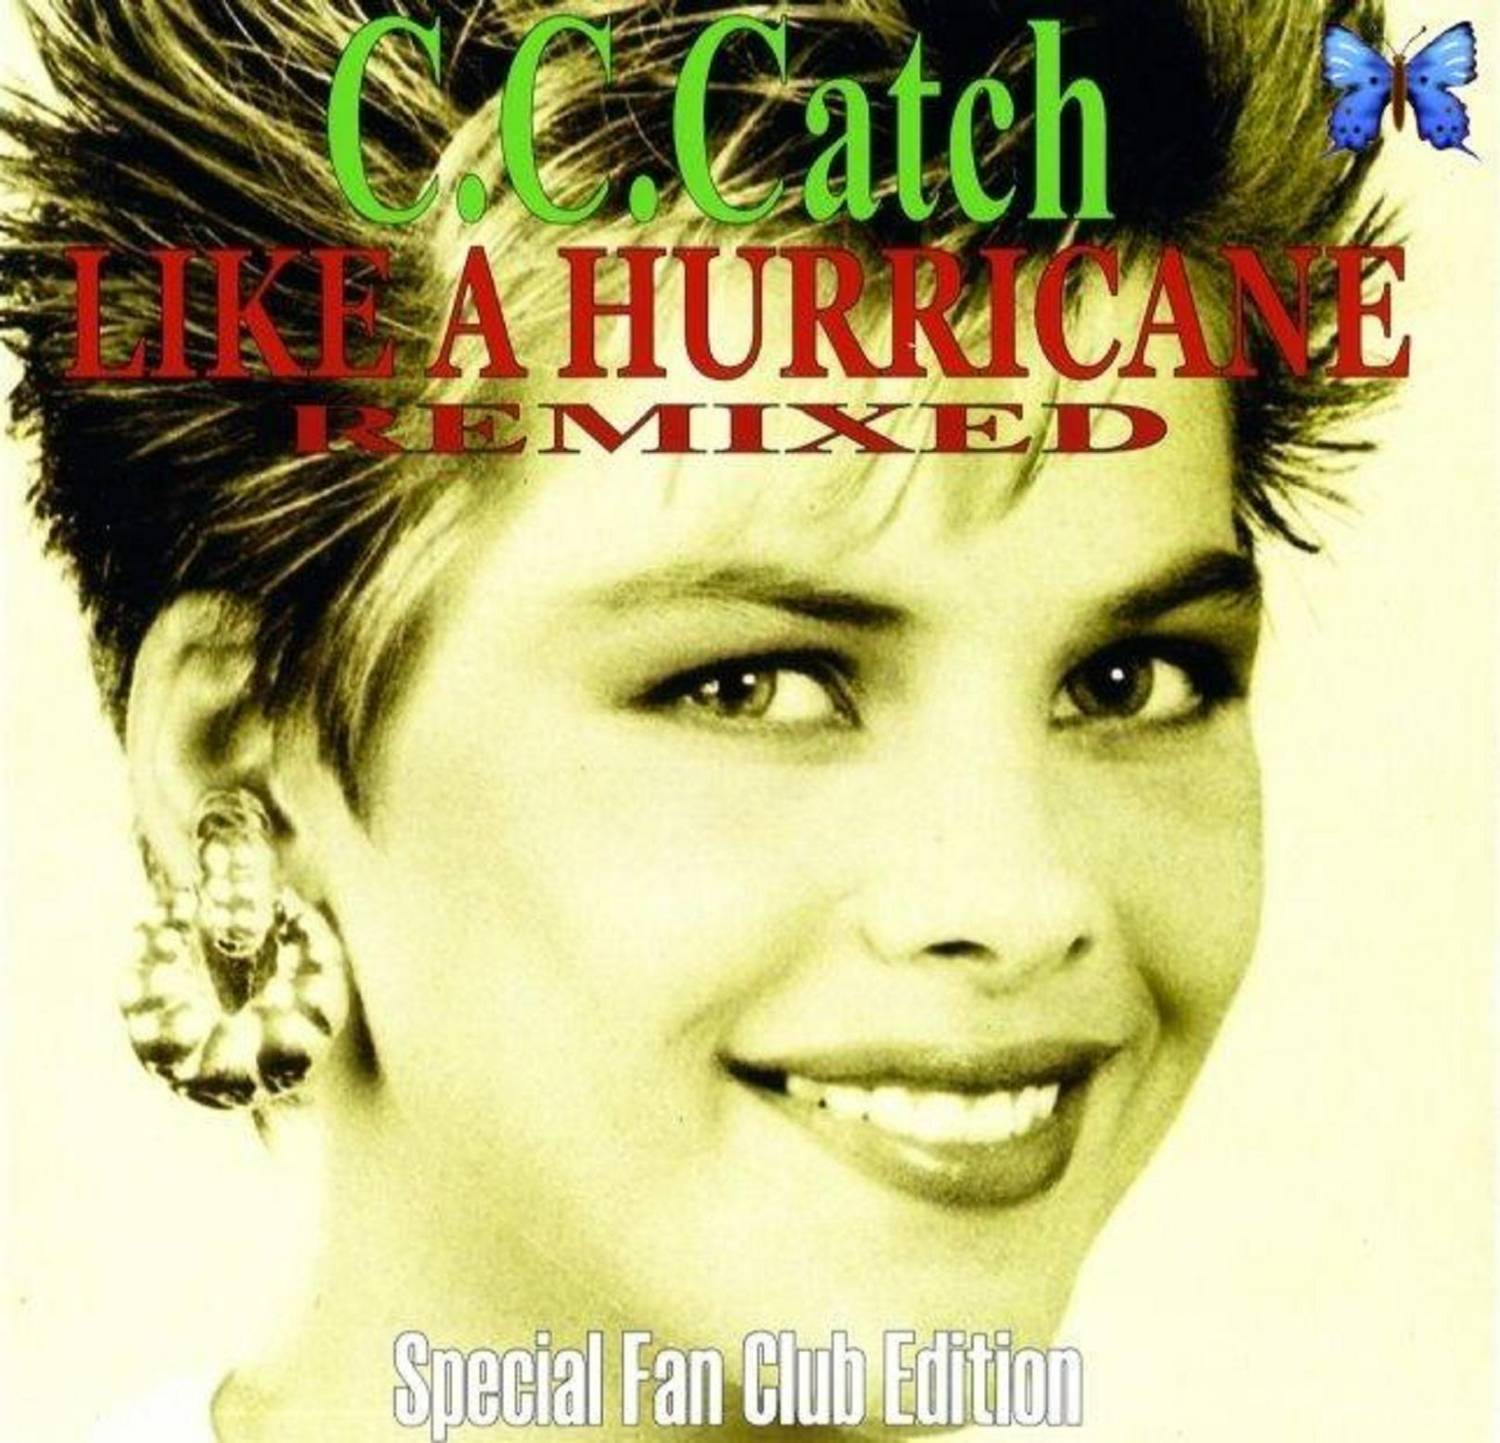  C.C.Catch - Like A Hurricane Remixed (2009)